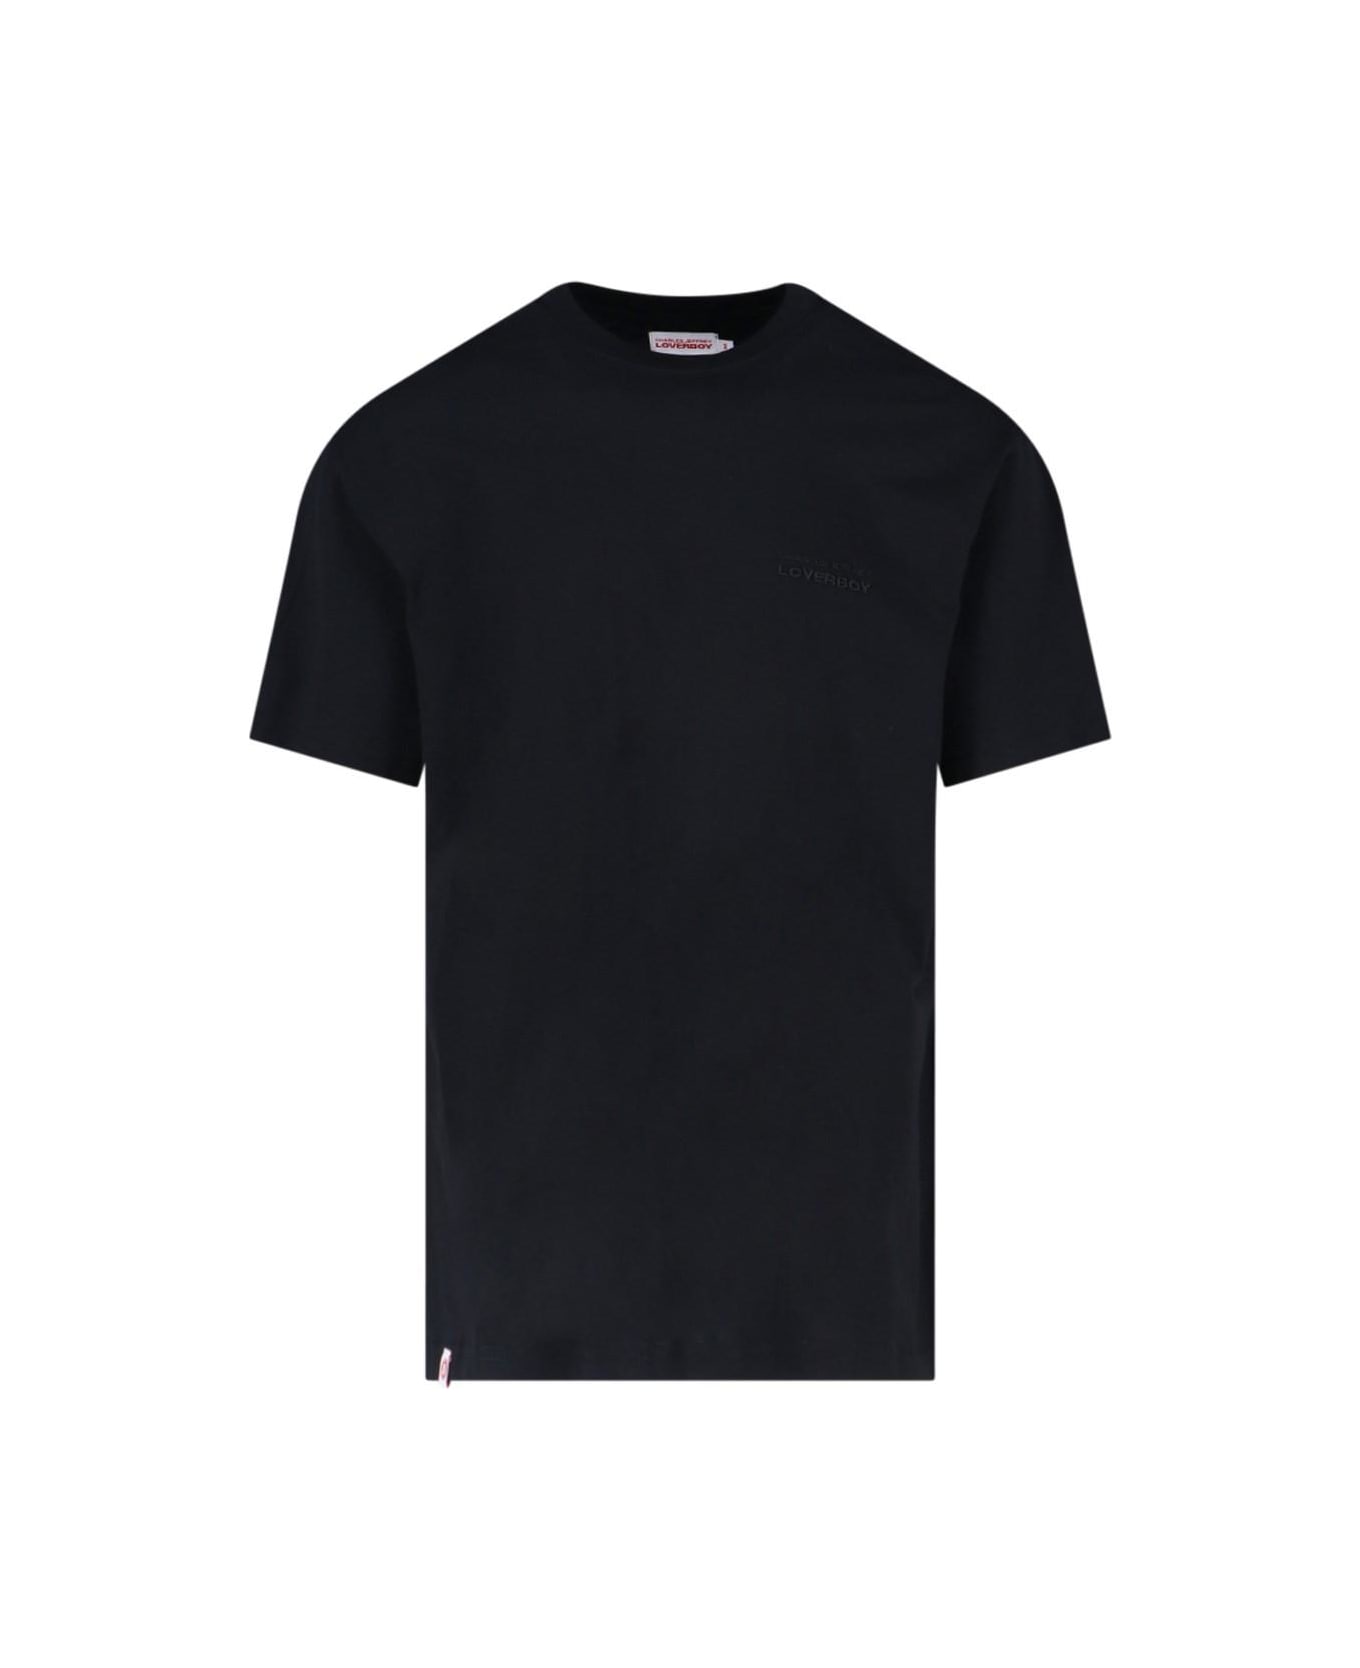 Charles Jeffrey Loverboy Art Gallery T-shirt - Black Tシャツ